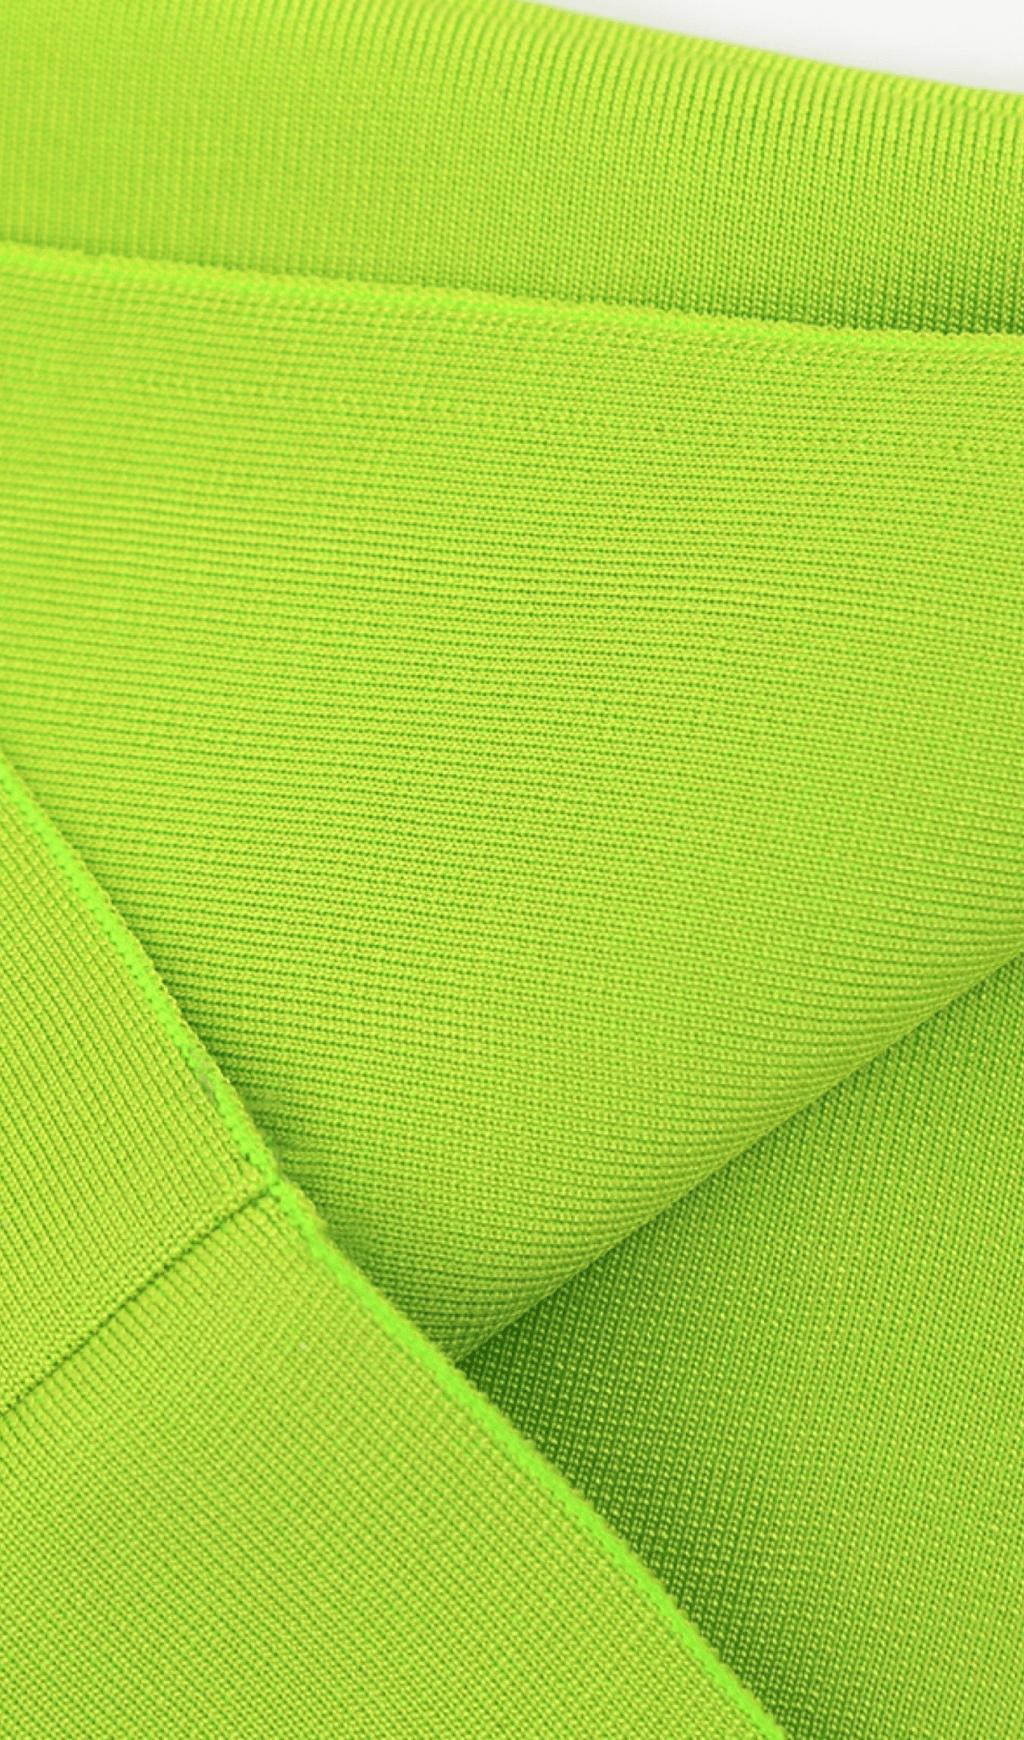 FLUORESCENT GREEN BANDAGE DRESS